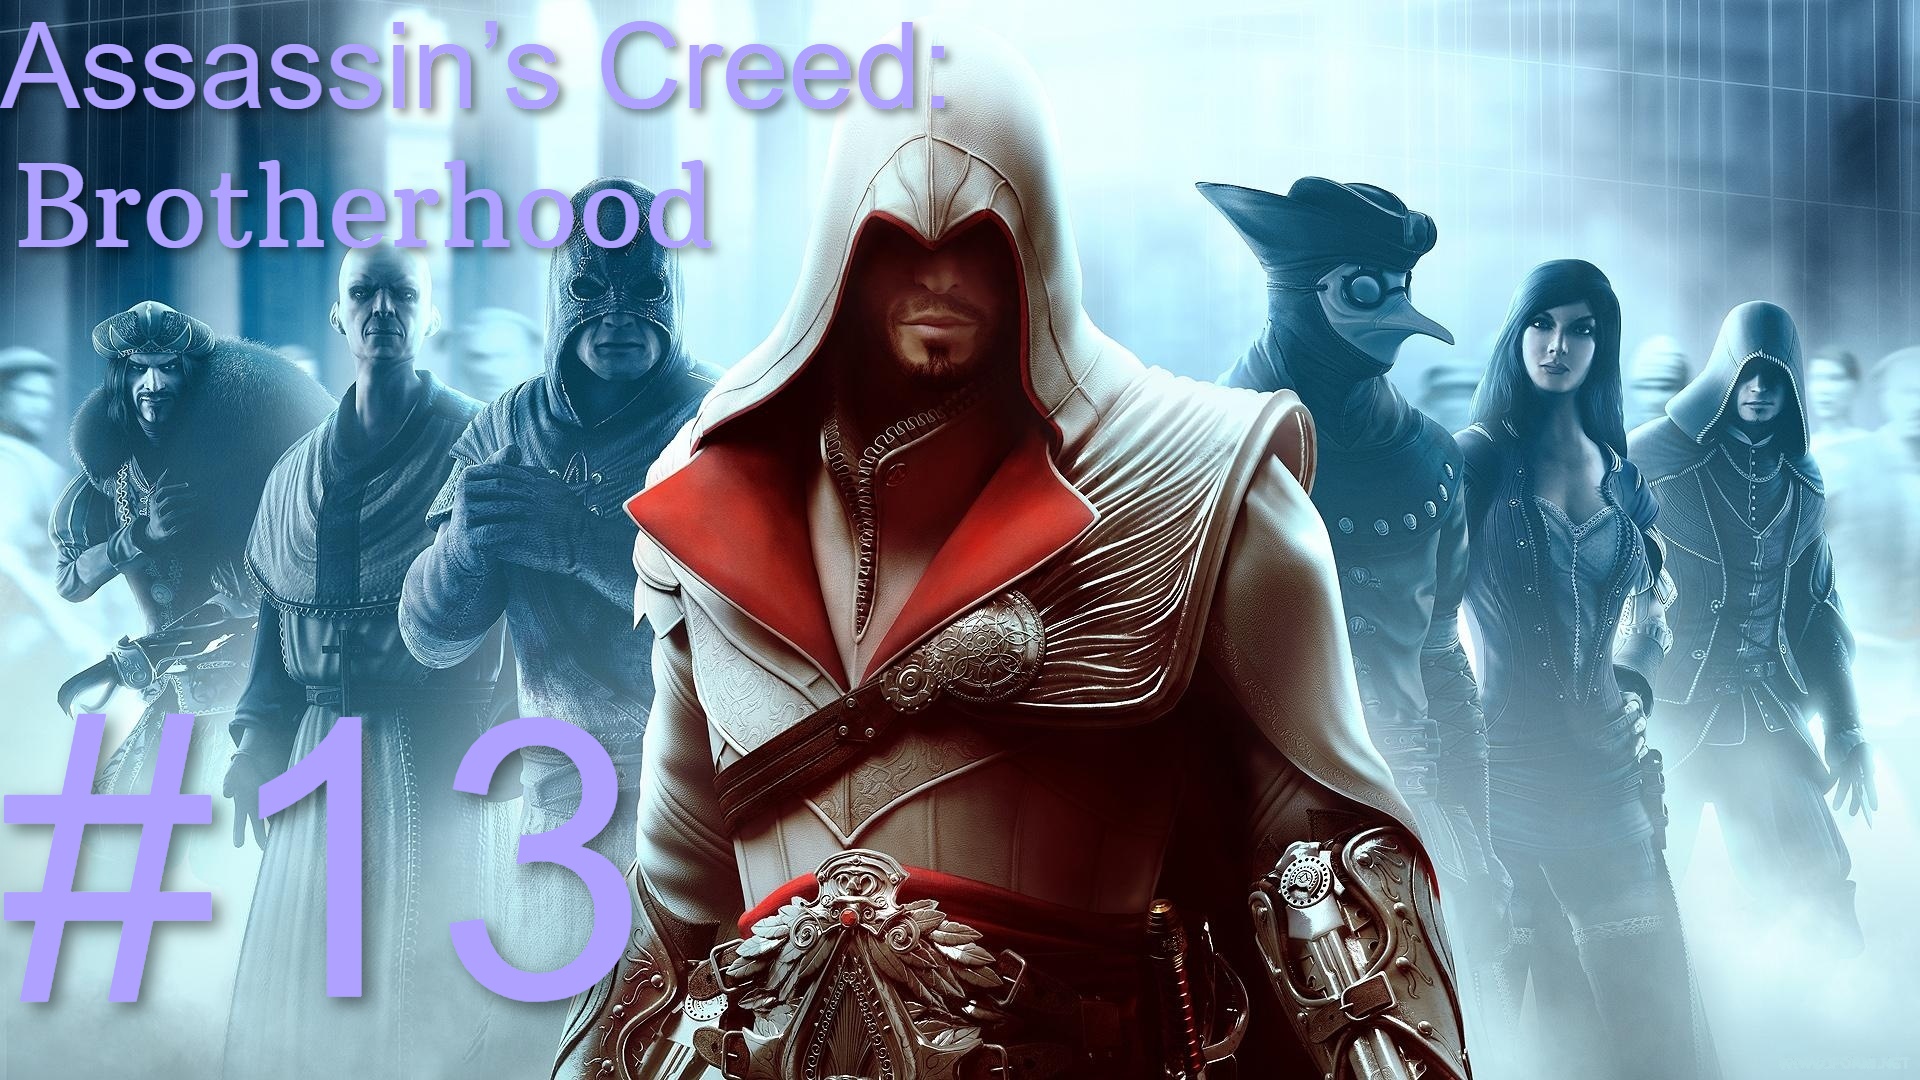 Assassin’s Creed: Brotherhood #13 Назад в прошлое